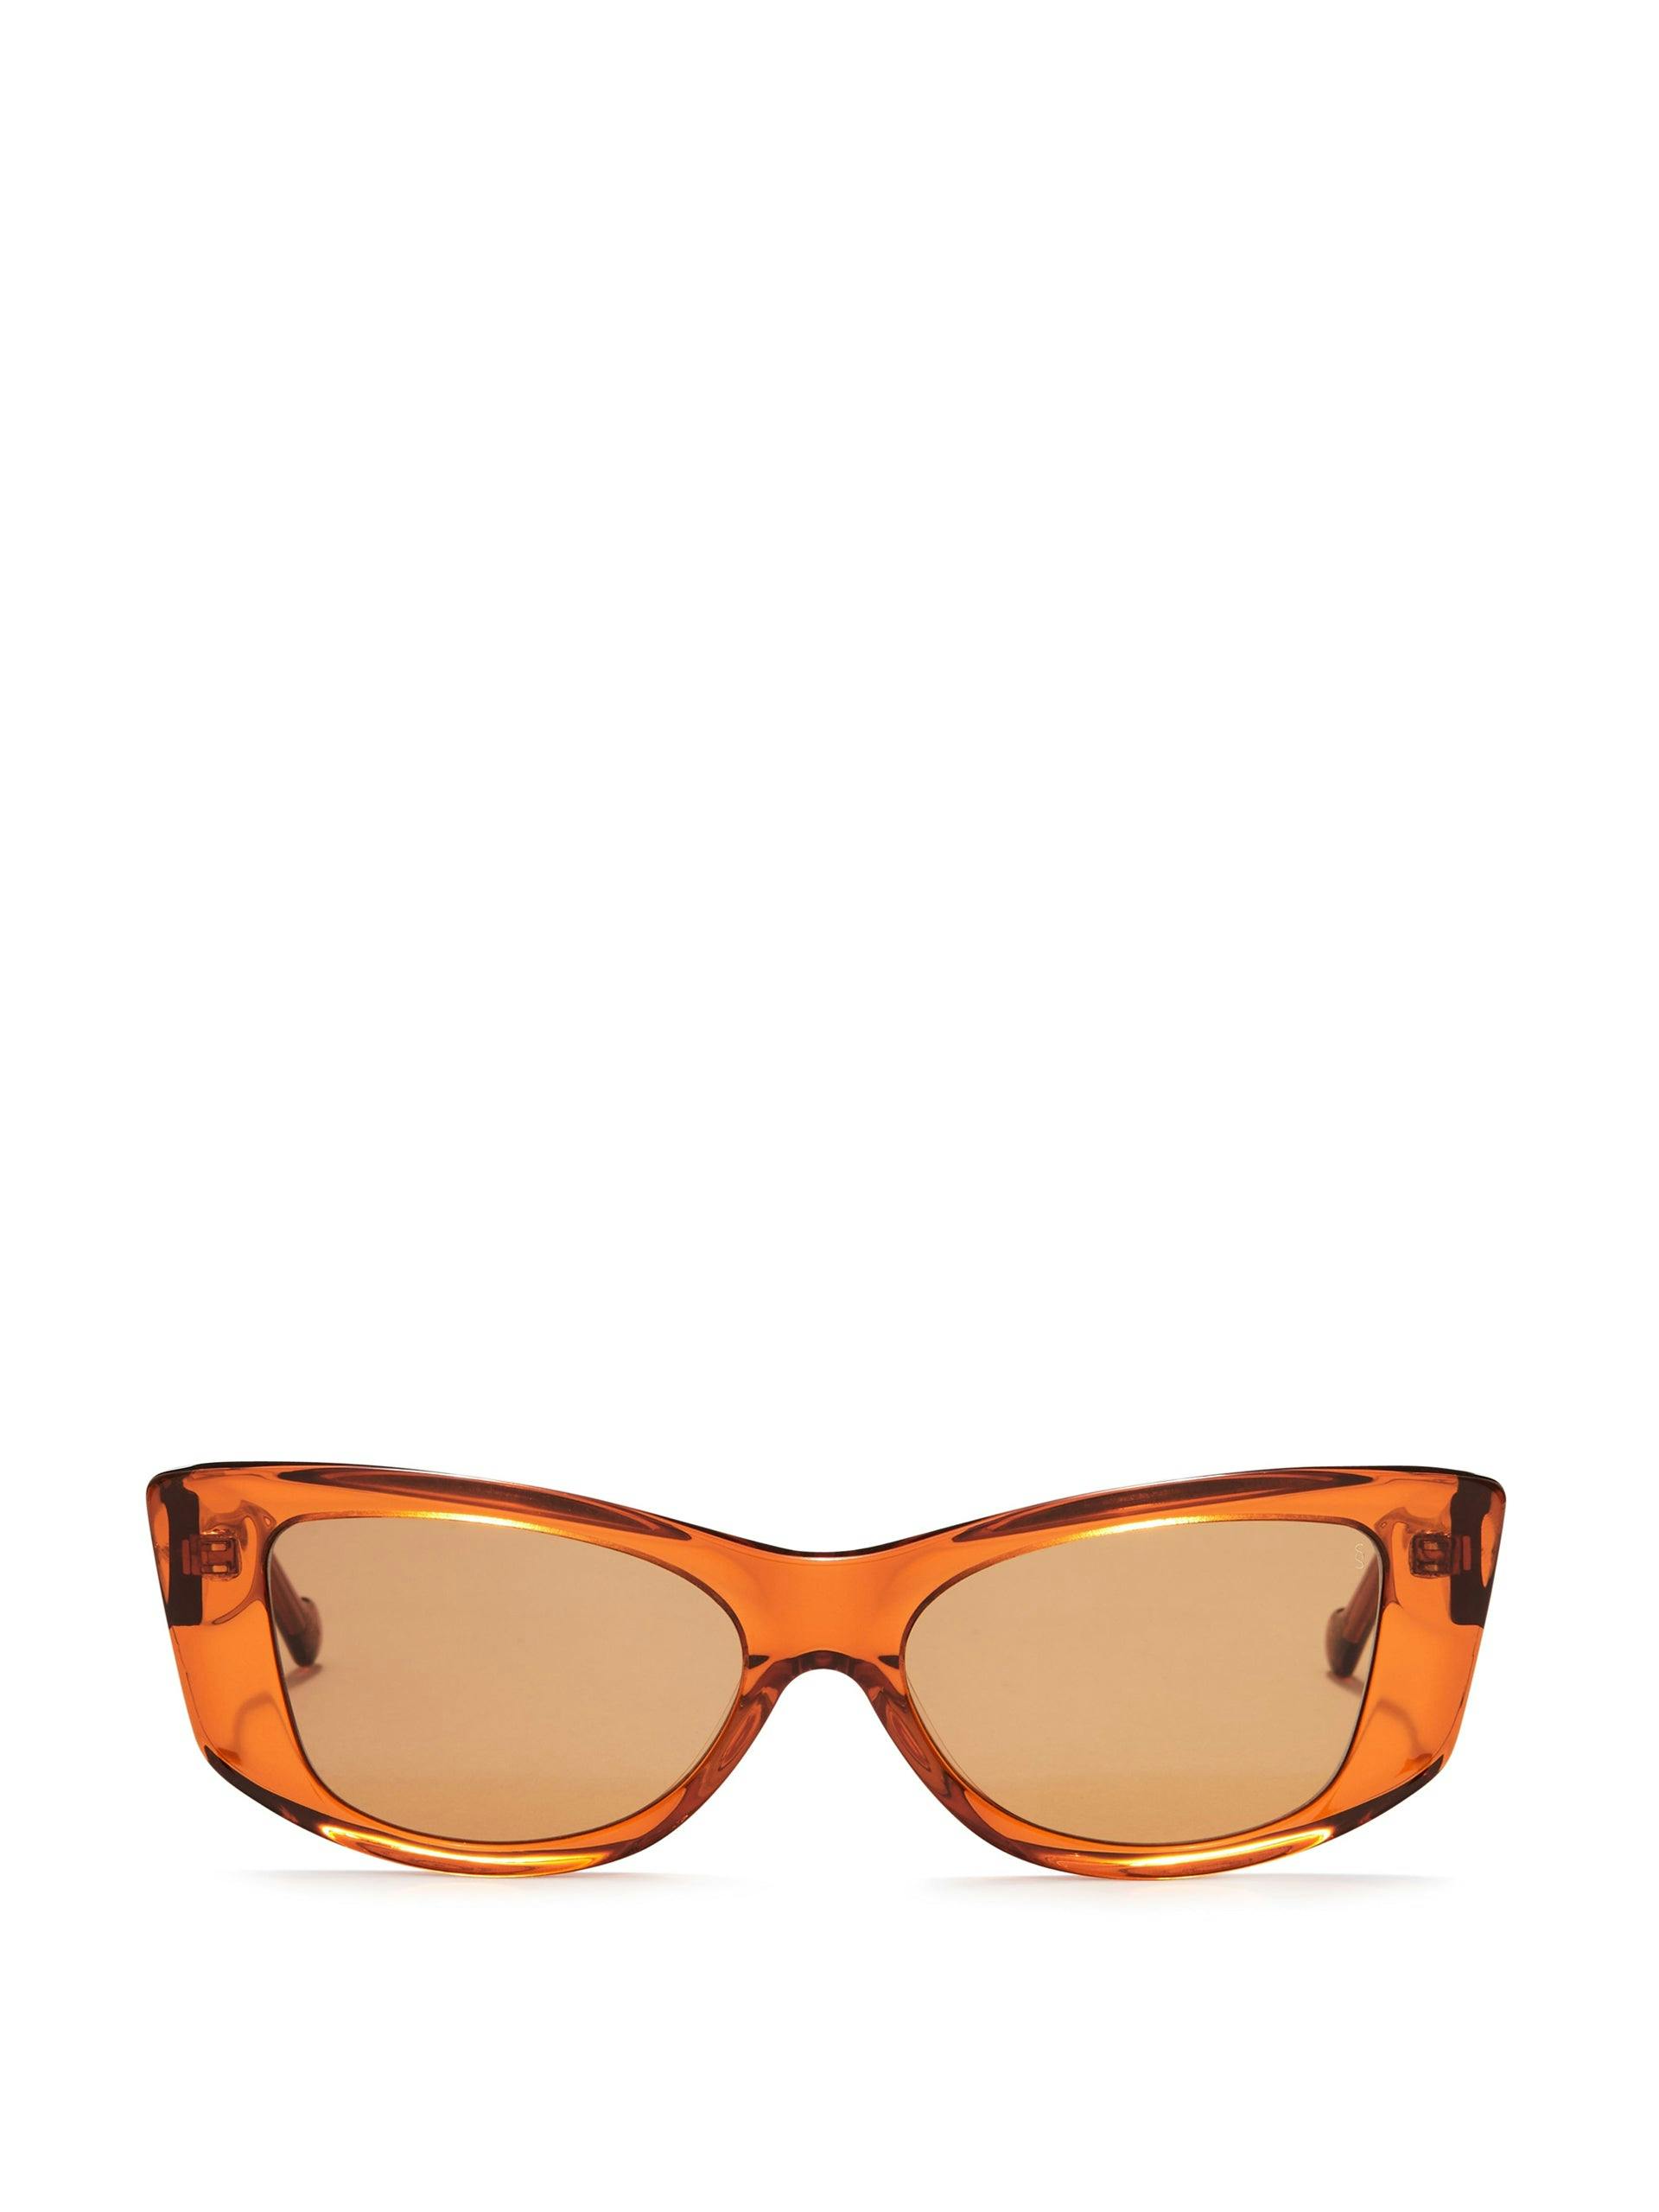 Bella sunglasses in orange crystal